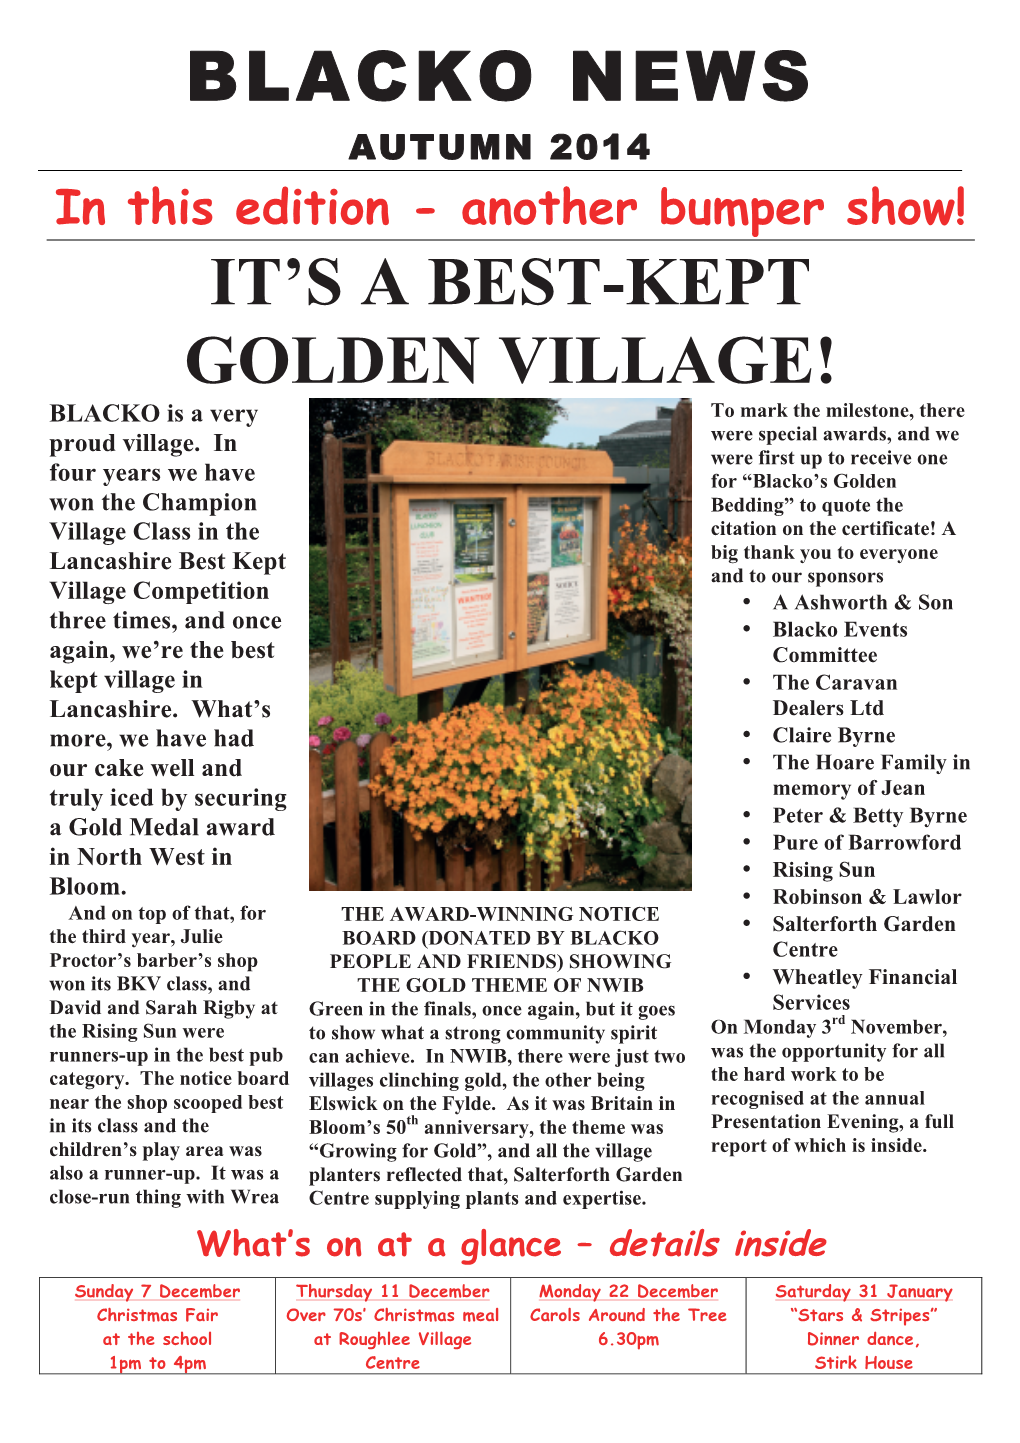 Blacko News It's a Best-Kept Golden Village!